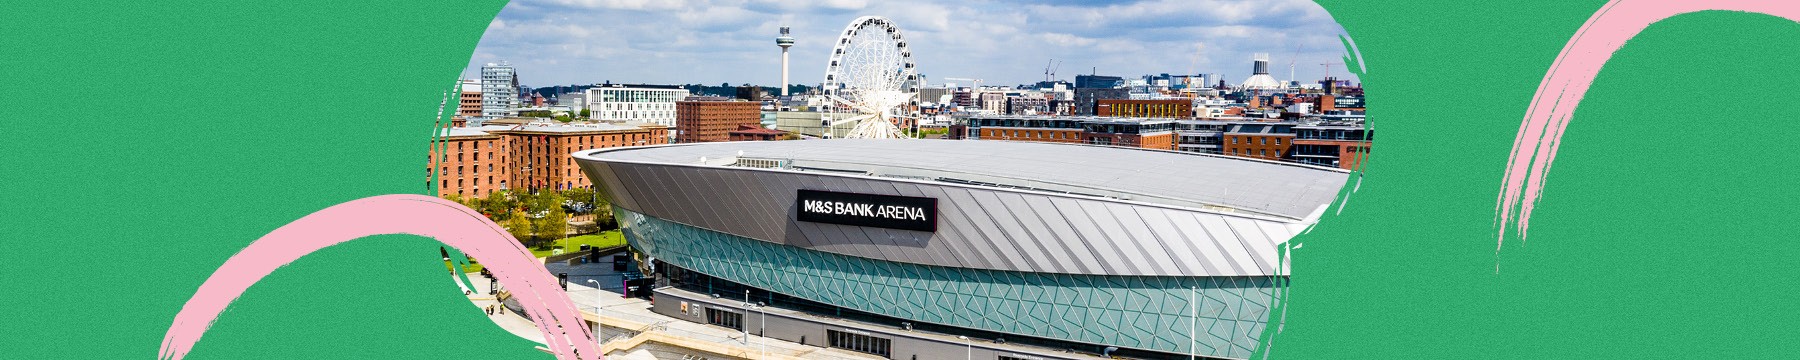 M&S Bank Arena Liverpool